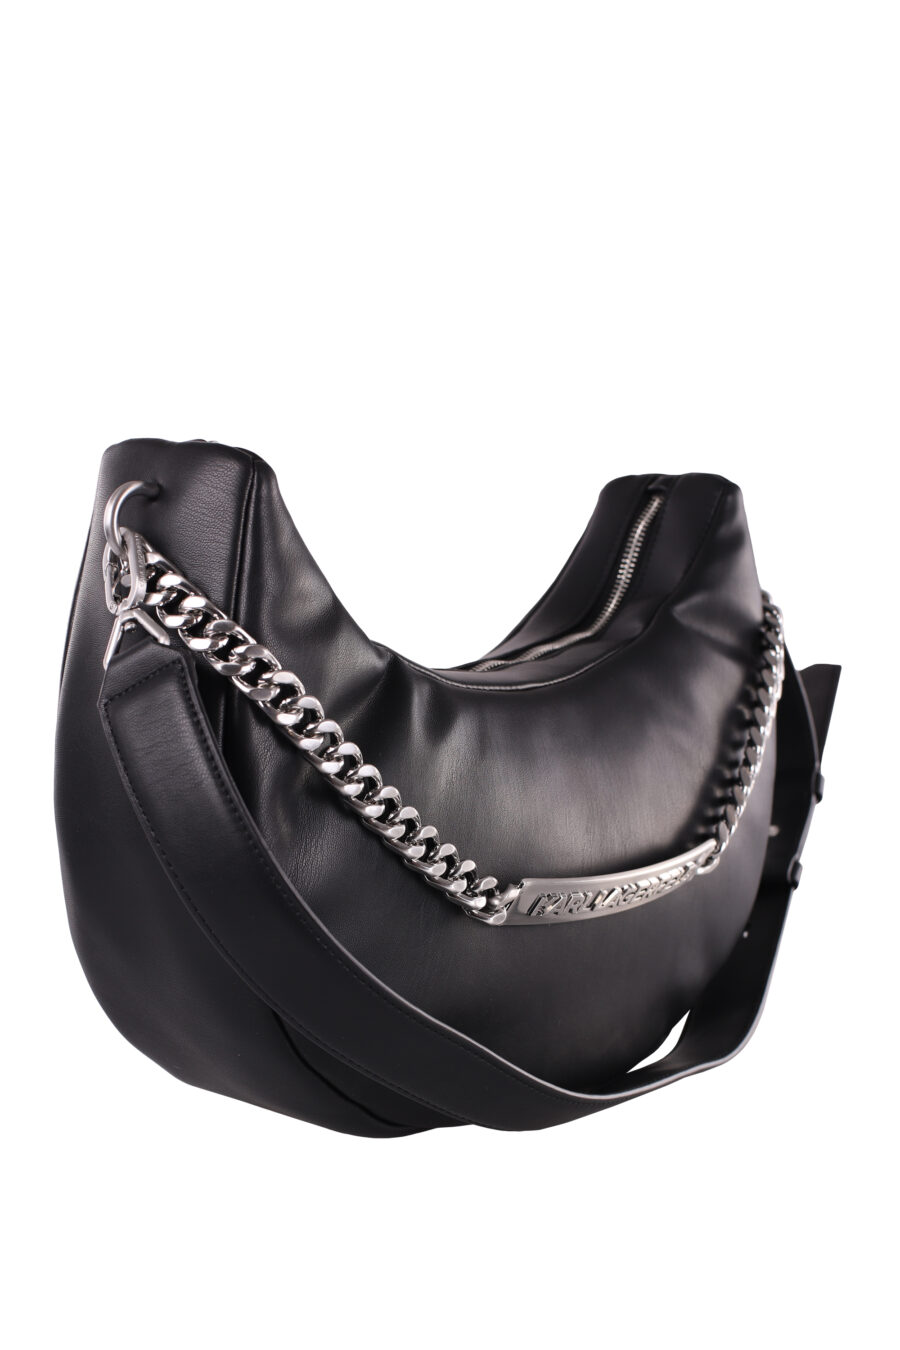 Bolso negro estilo hobo con cadena plateada - IMG 6046